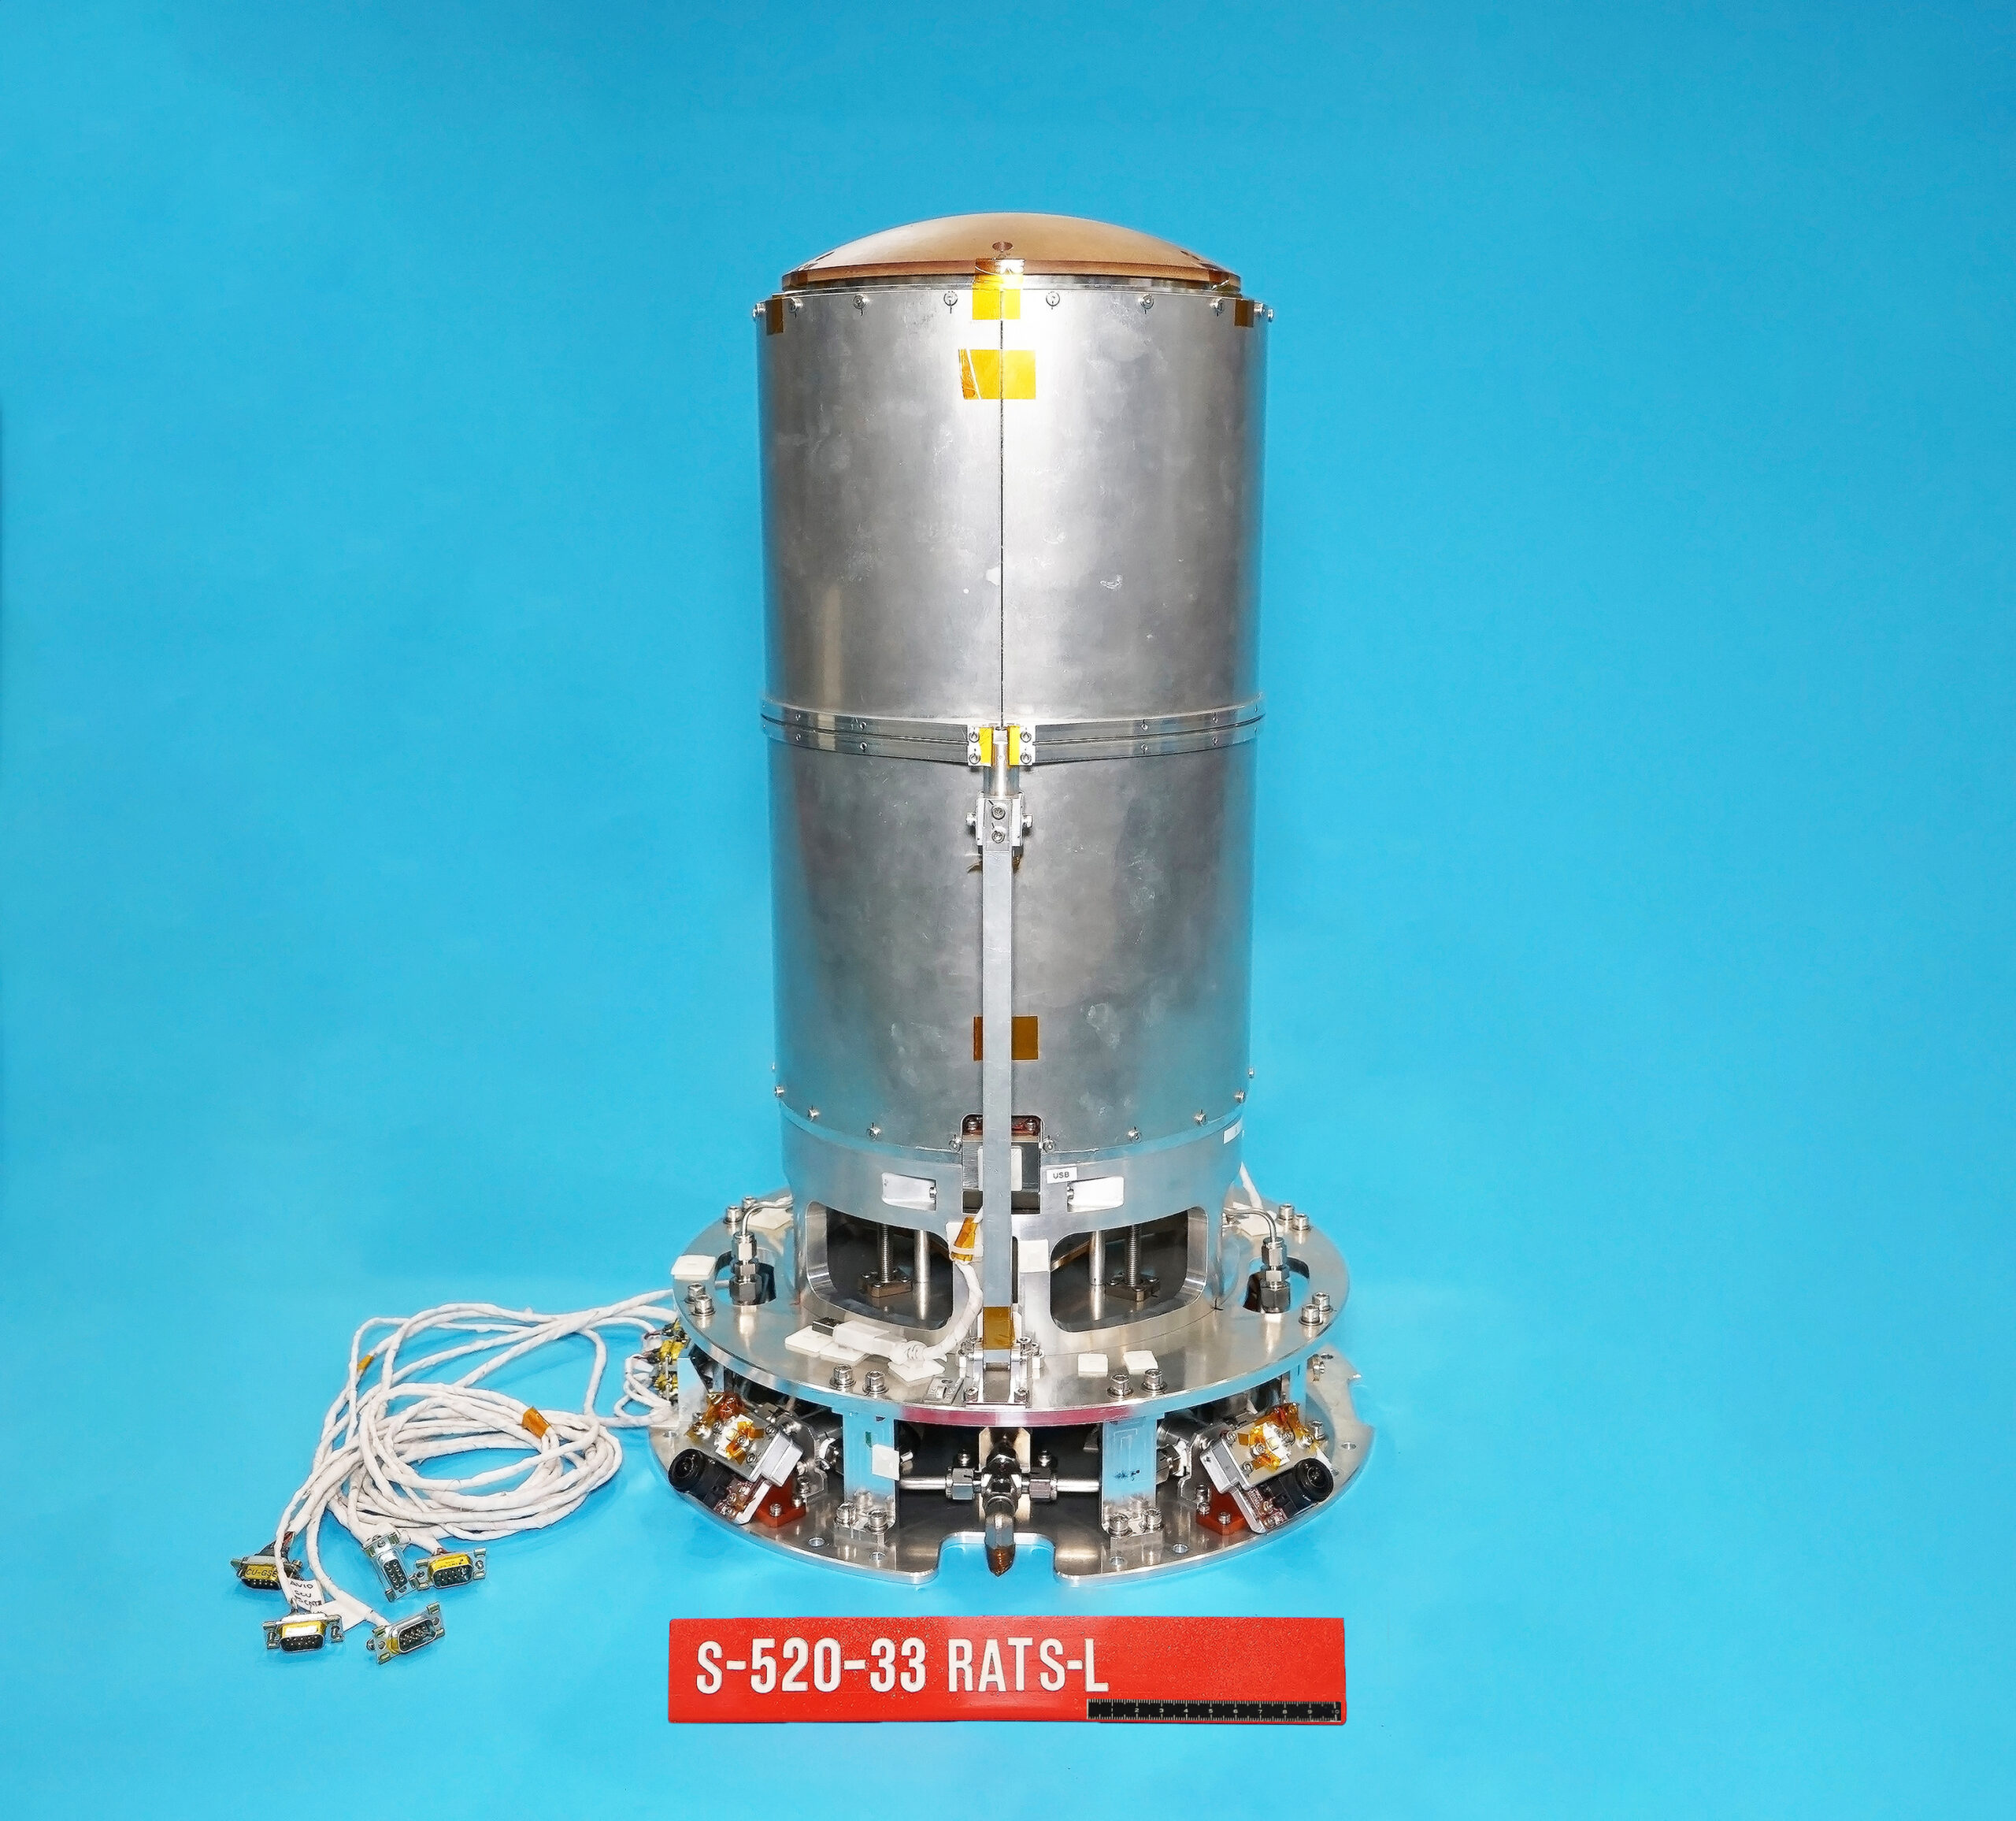 JAXAの観測ロケットS-520-33号機、内之浦宇宙空間観測所から無事に打上げ